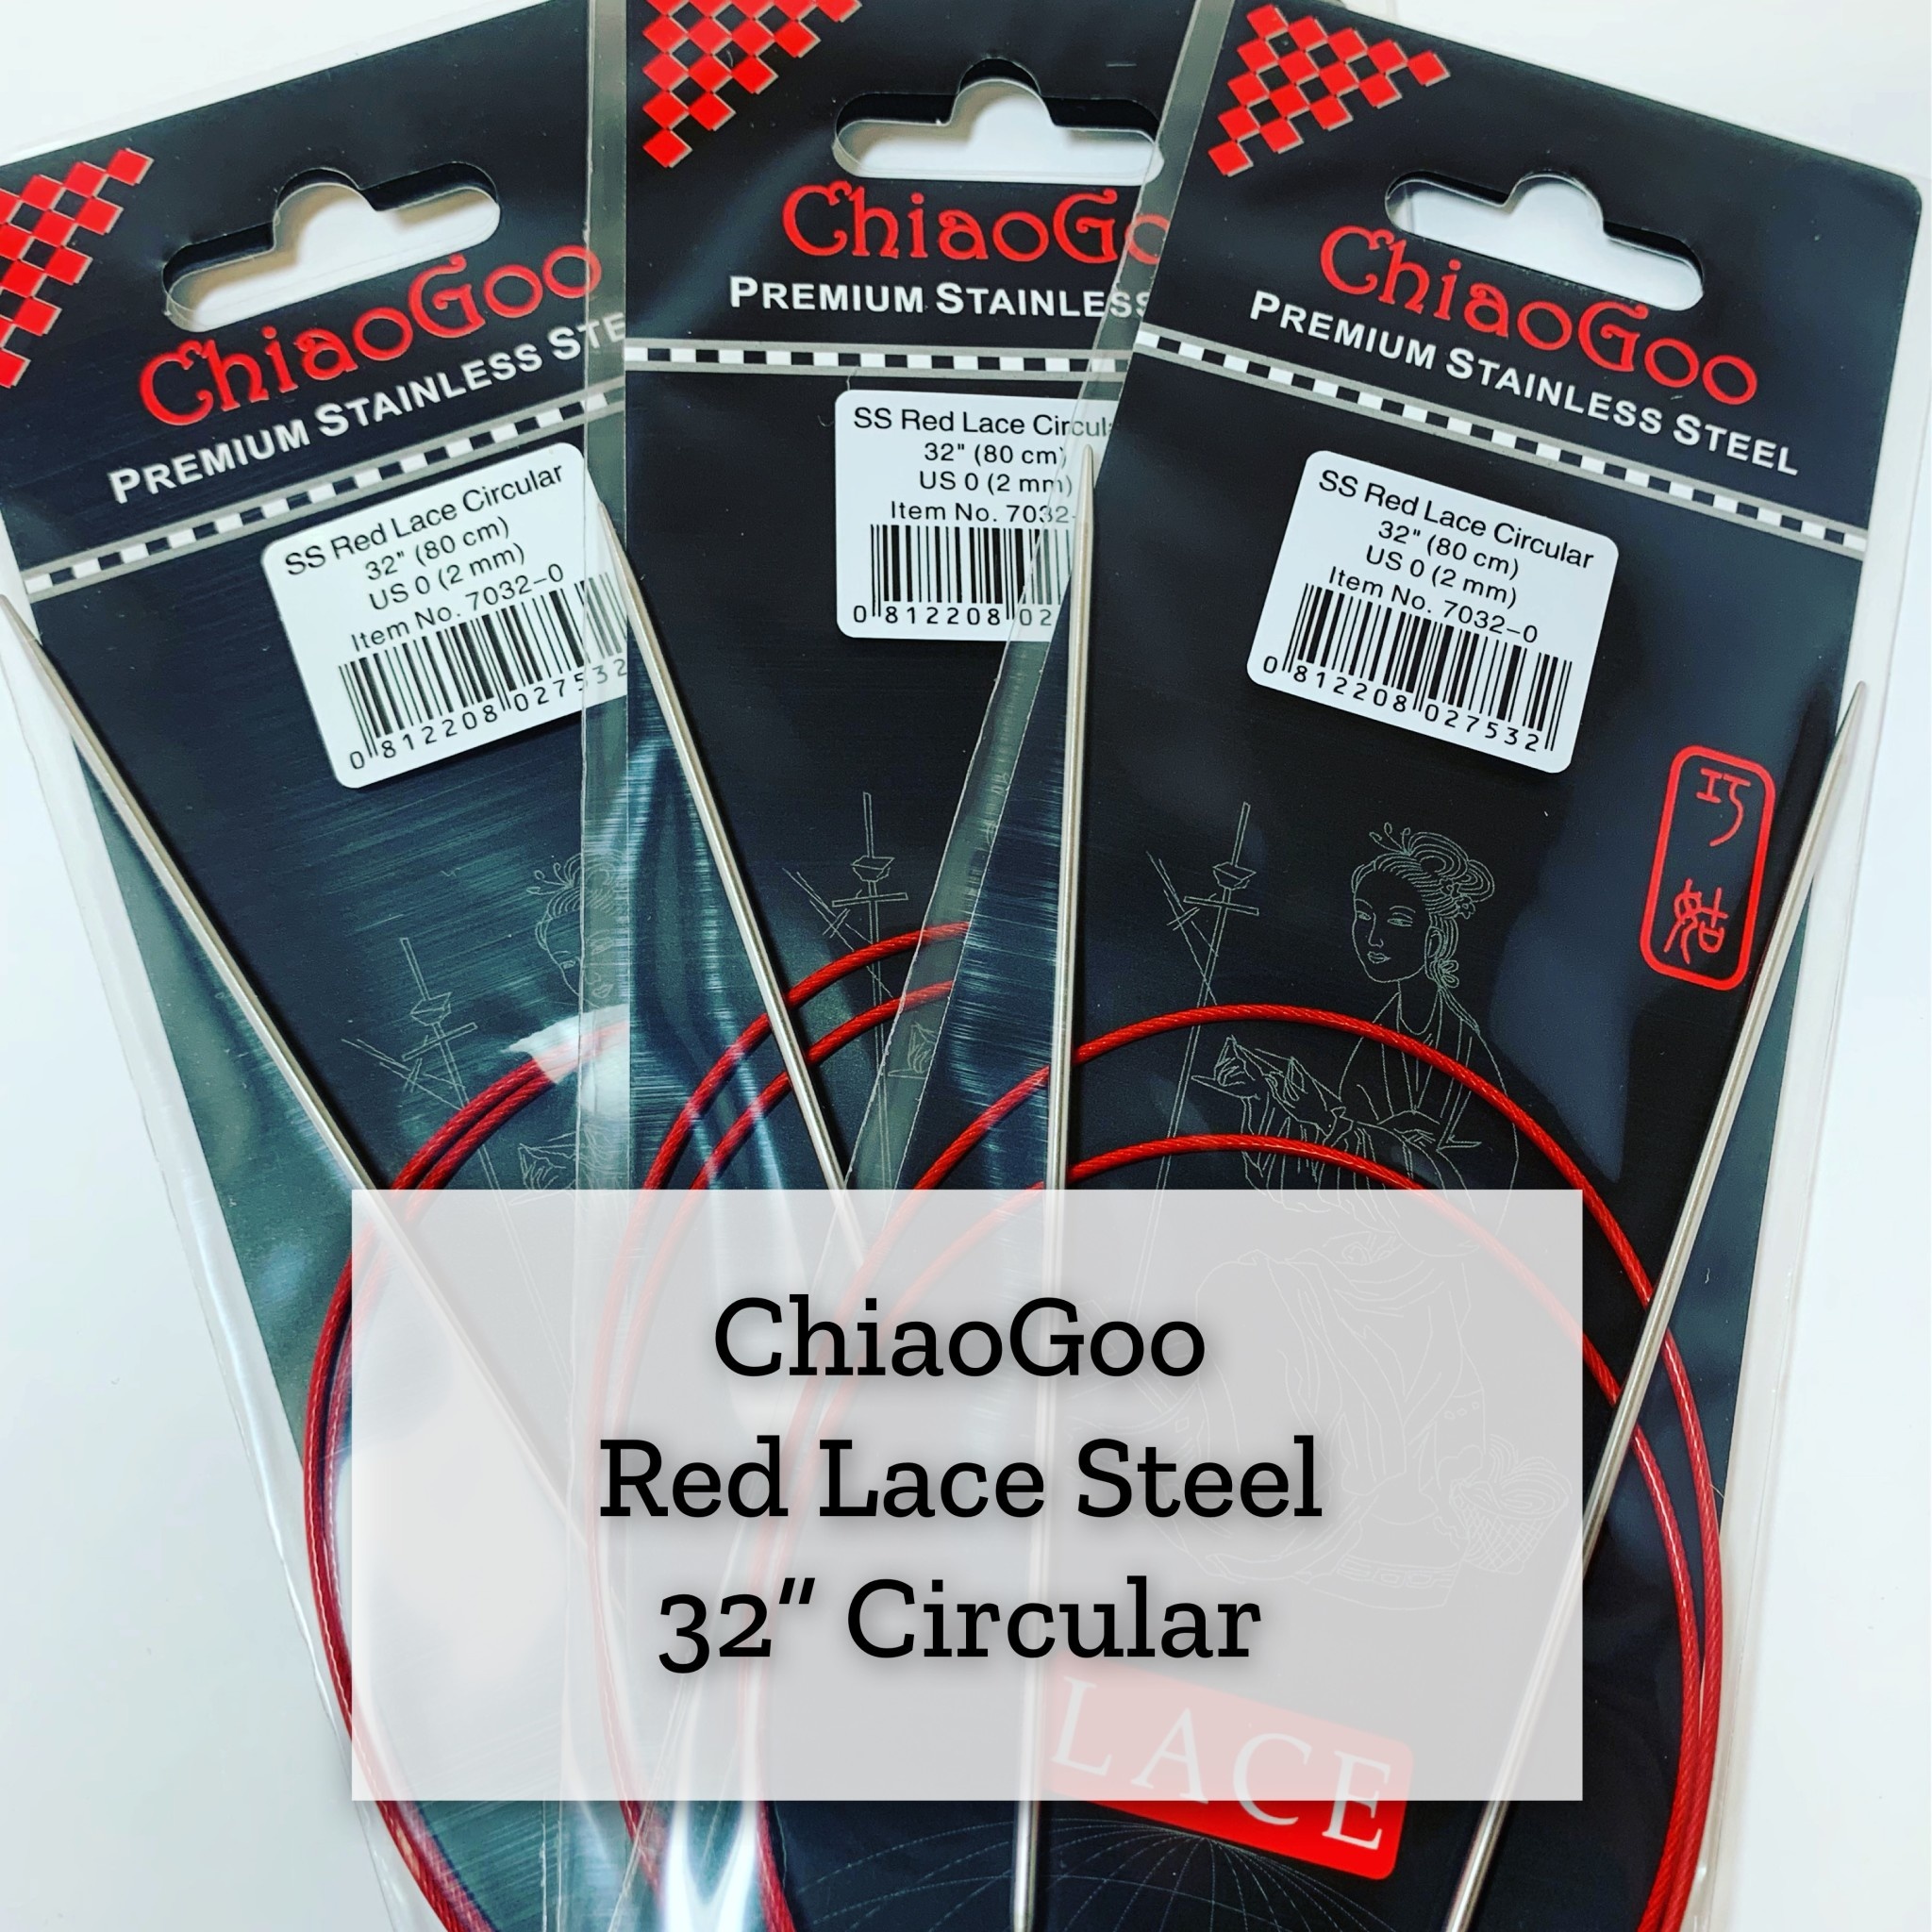 ChiaoGoo Red Lace Steel - 32" 5.5 mm